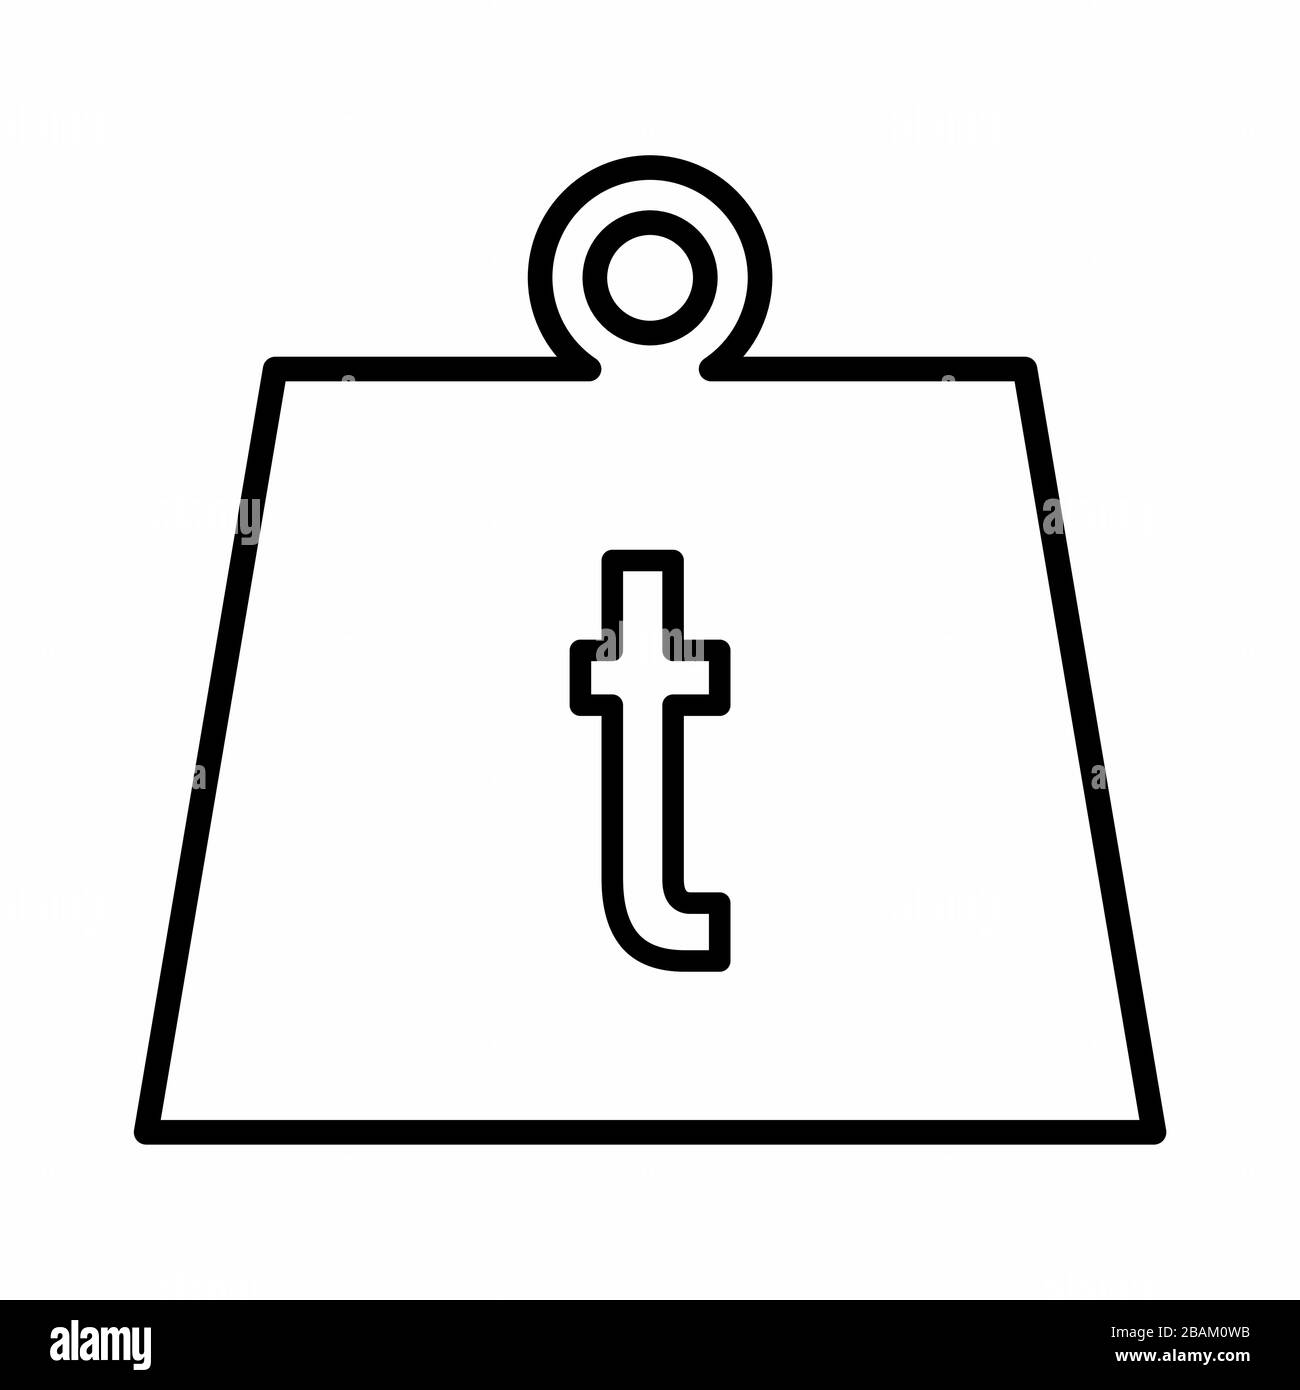 Symbol für Gewicht Ton Stock-Vektorgrafik - Alamy